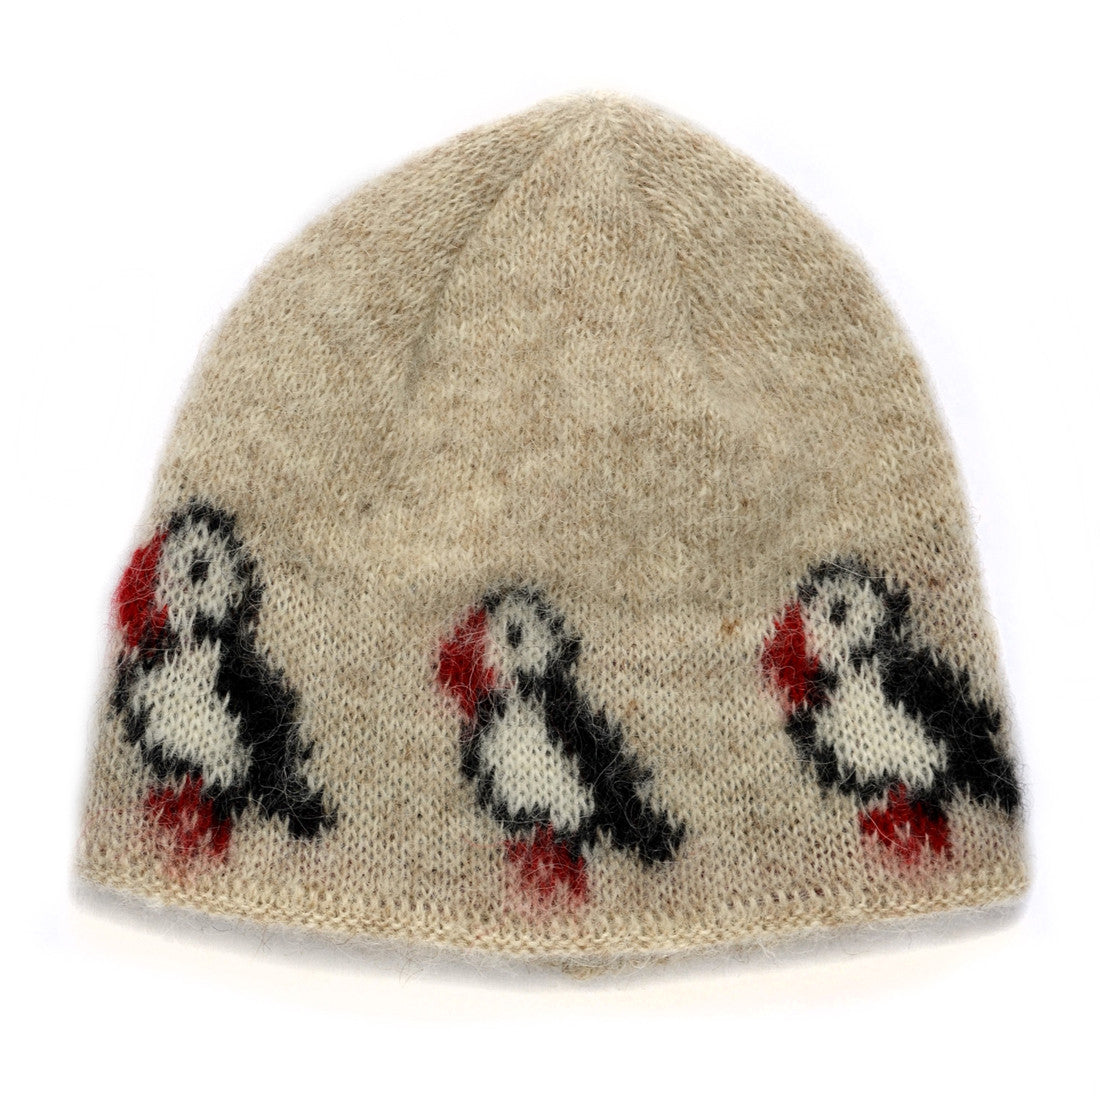 Kidka wool hat - Puffin - Beige - Álafoss - Since 1896